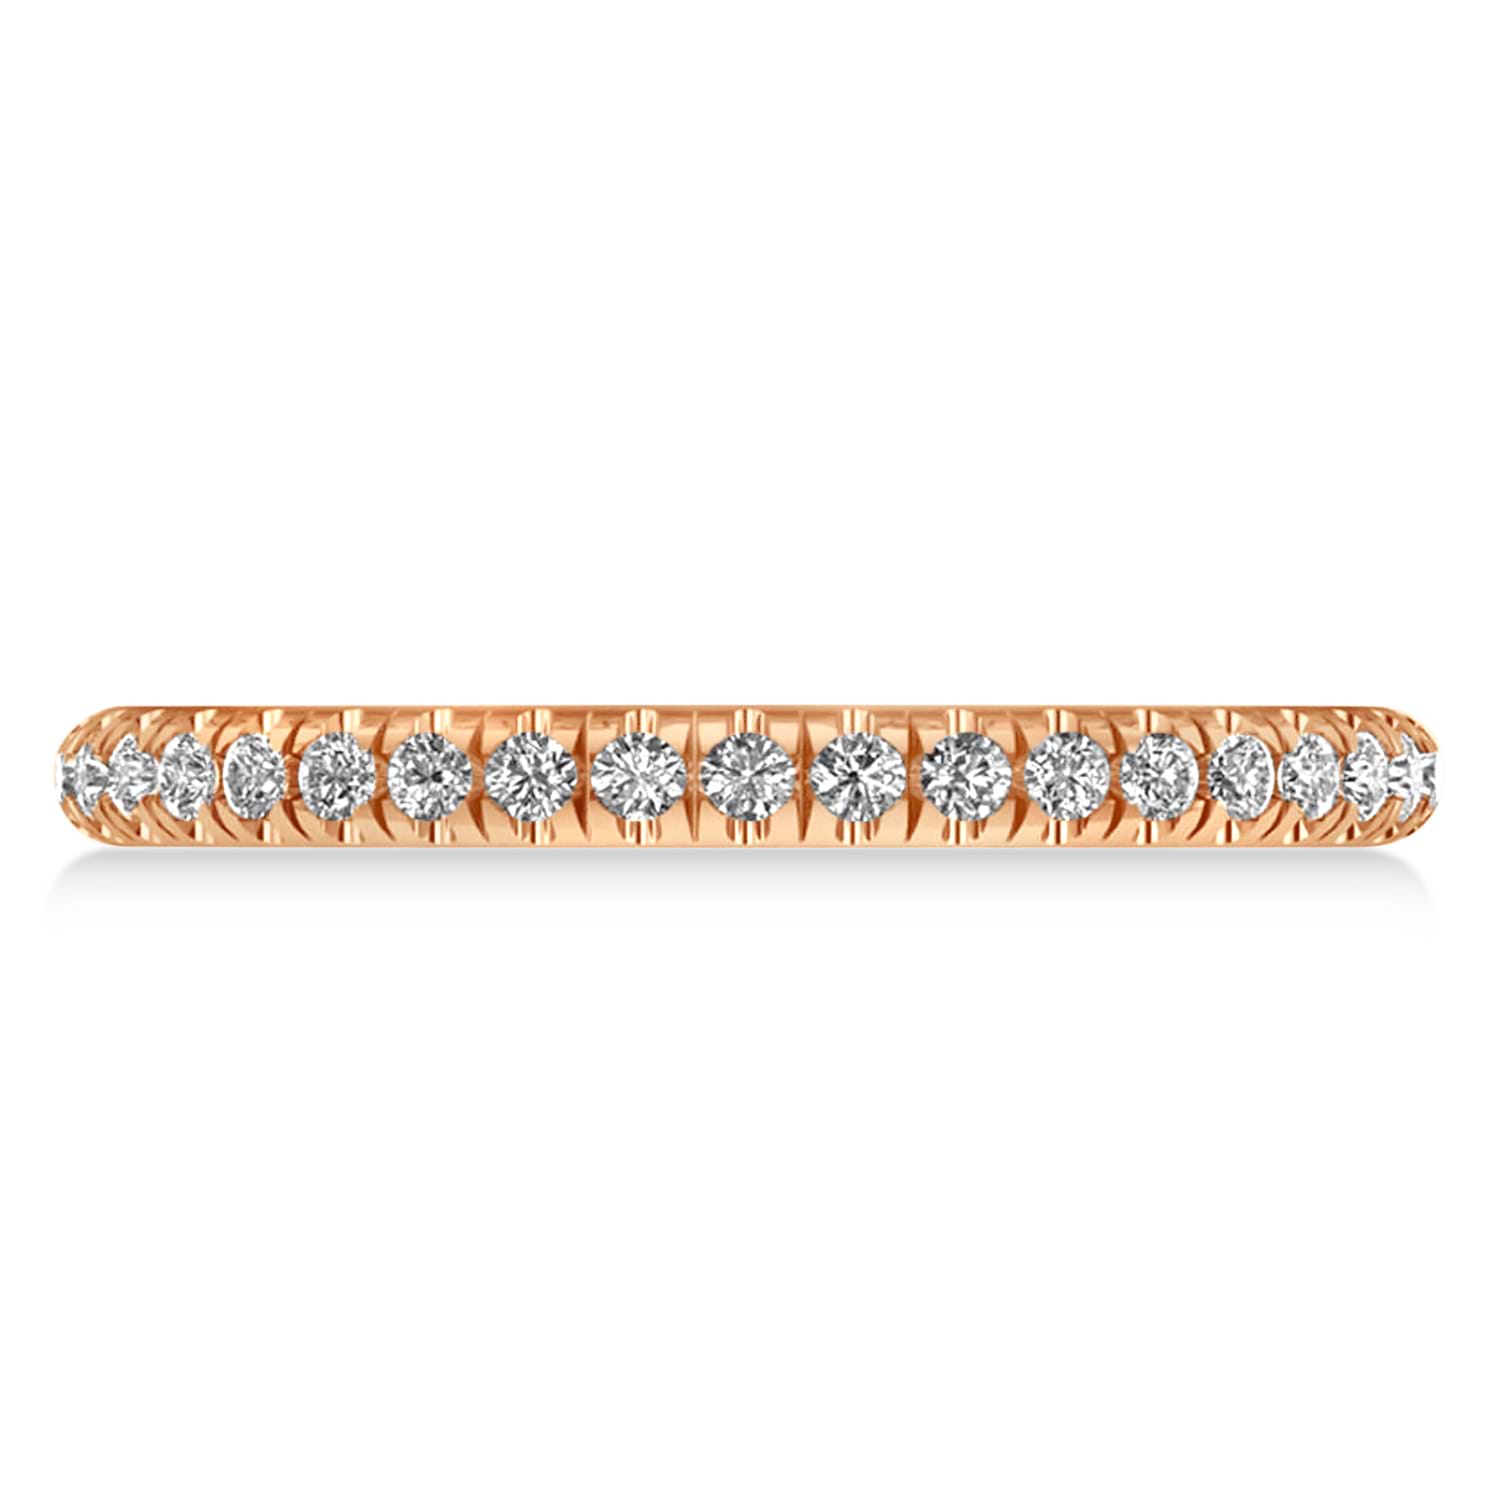 Diamond Semi-Eternity Ring Wedding Band 18k Rose Gold (0.41ct)